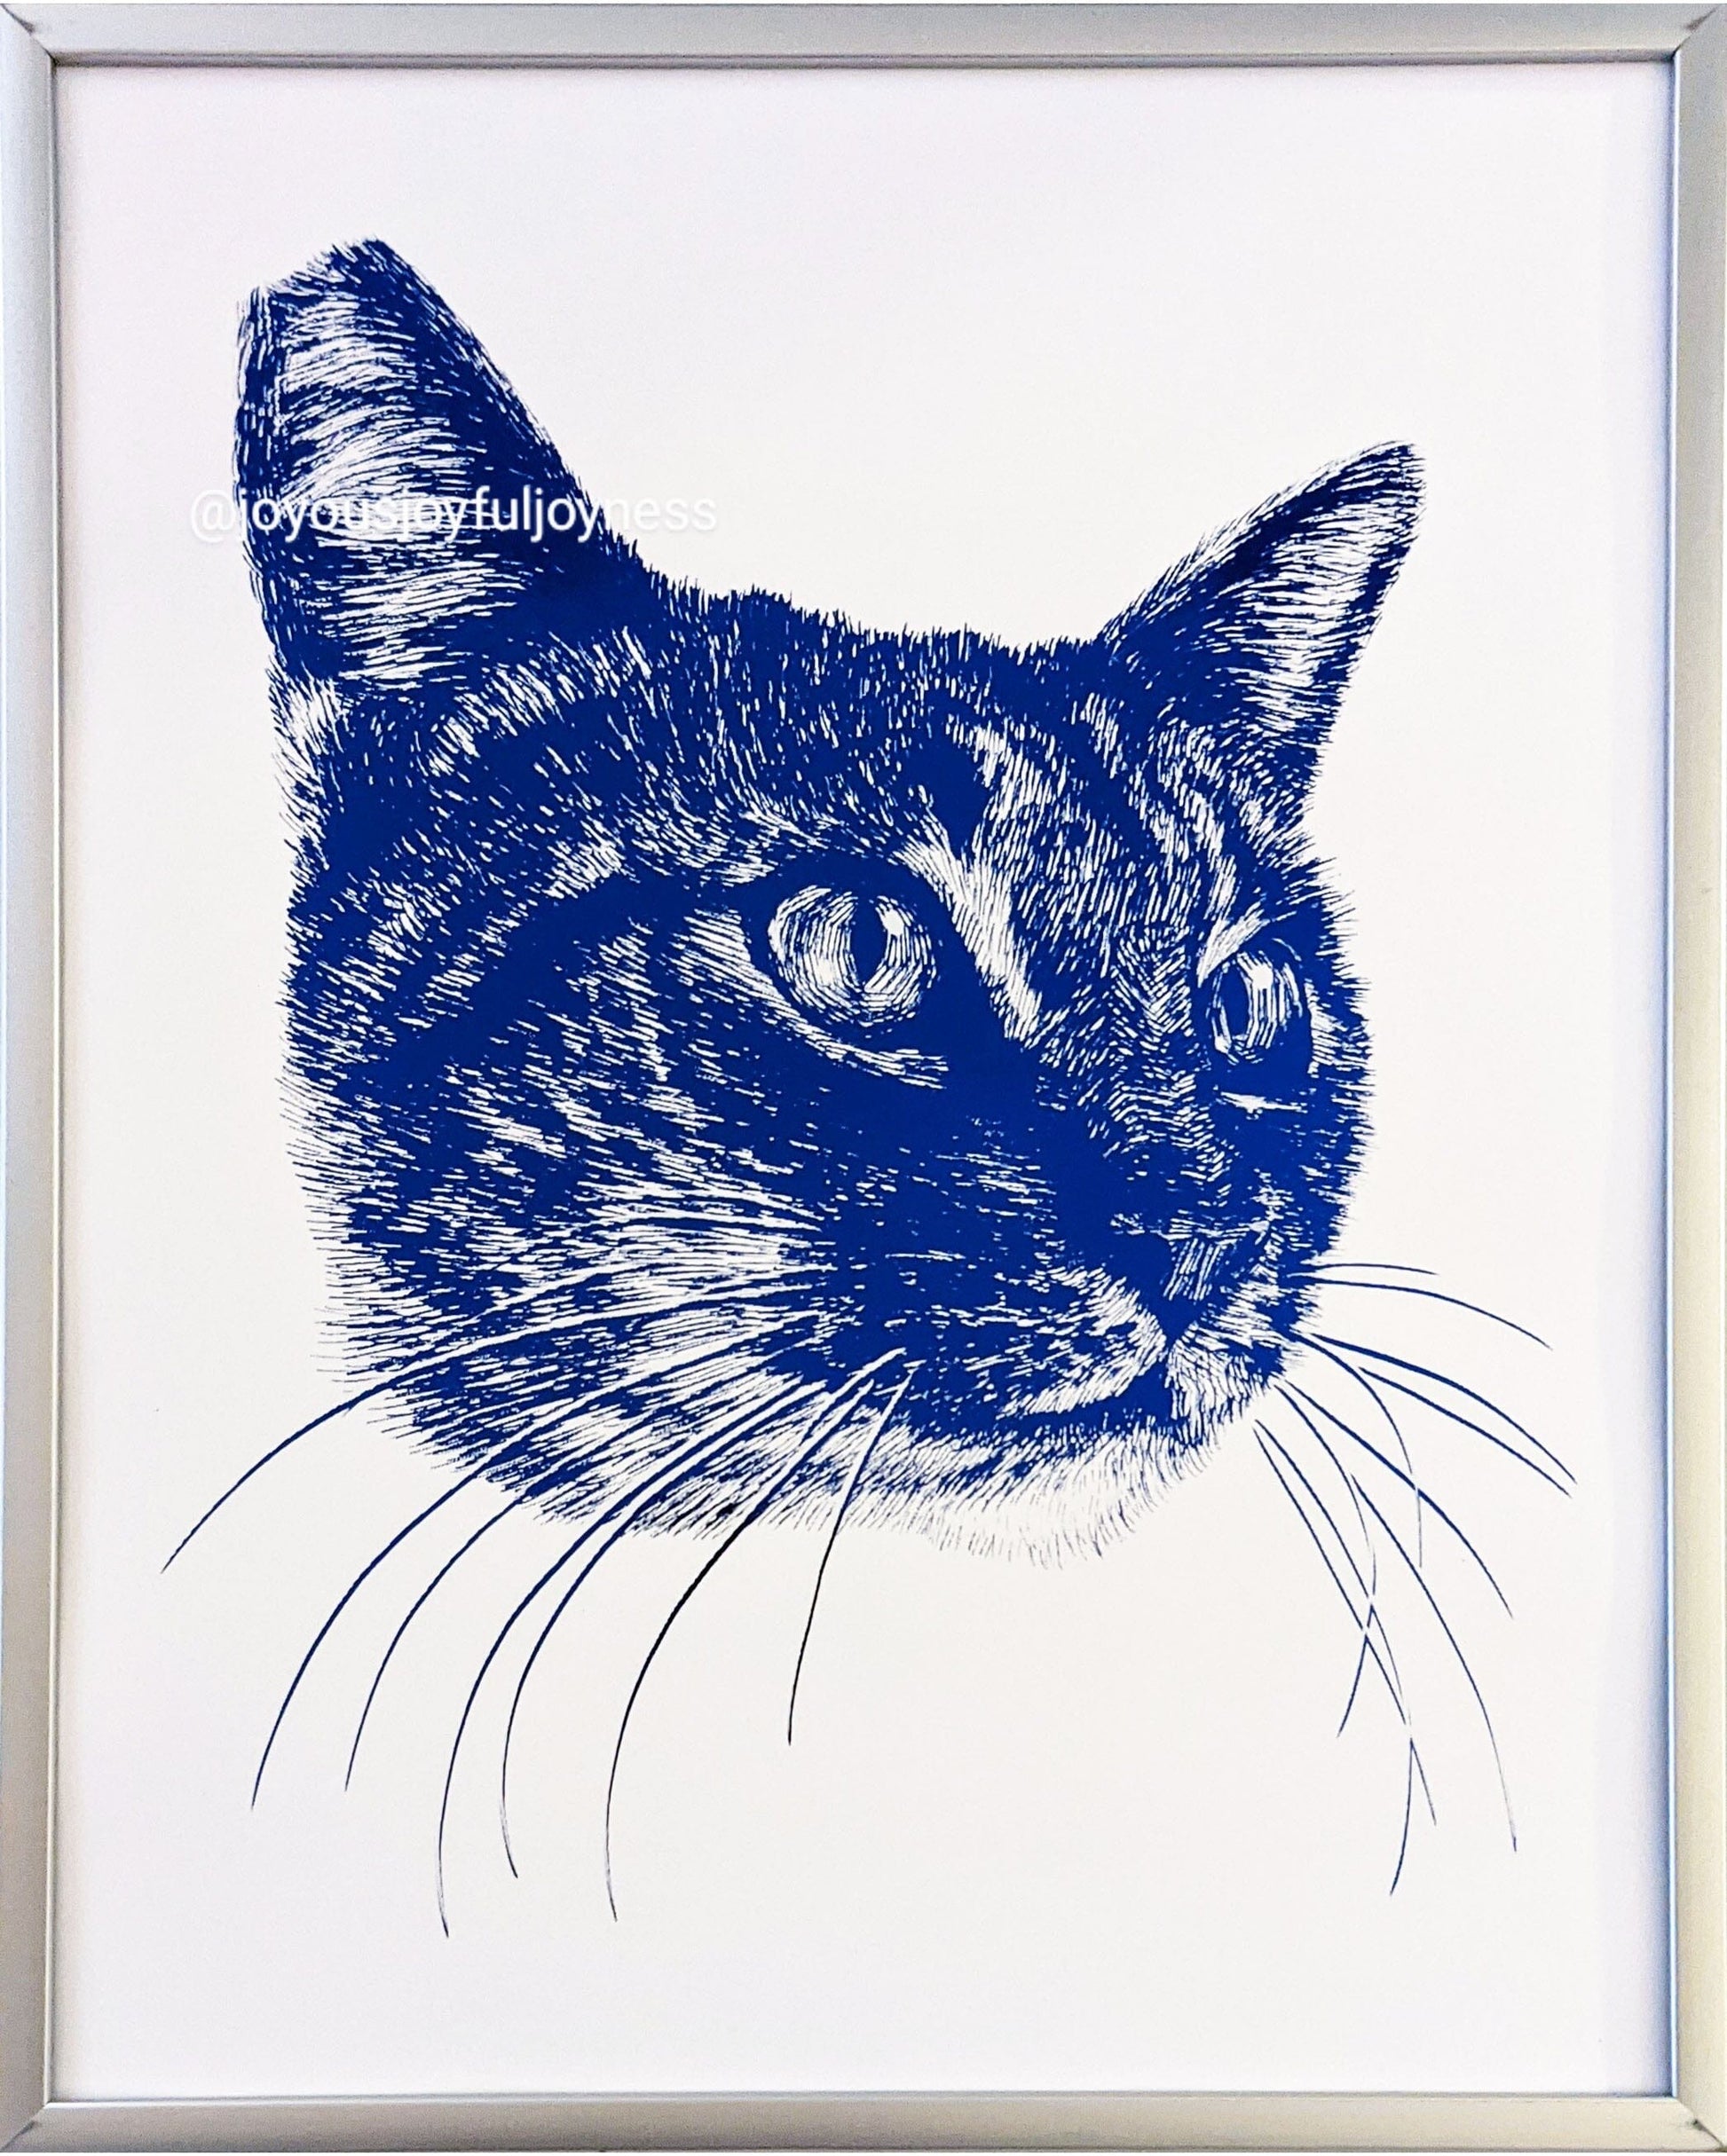 Hand Painted Cat Portraits Posters, Prints, & Visual Artwork JoyousJoyfulJoyness 